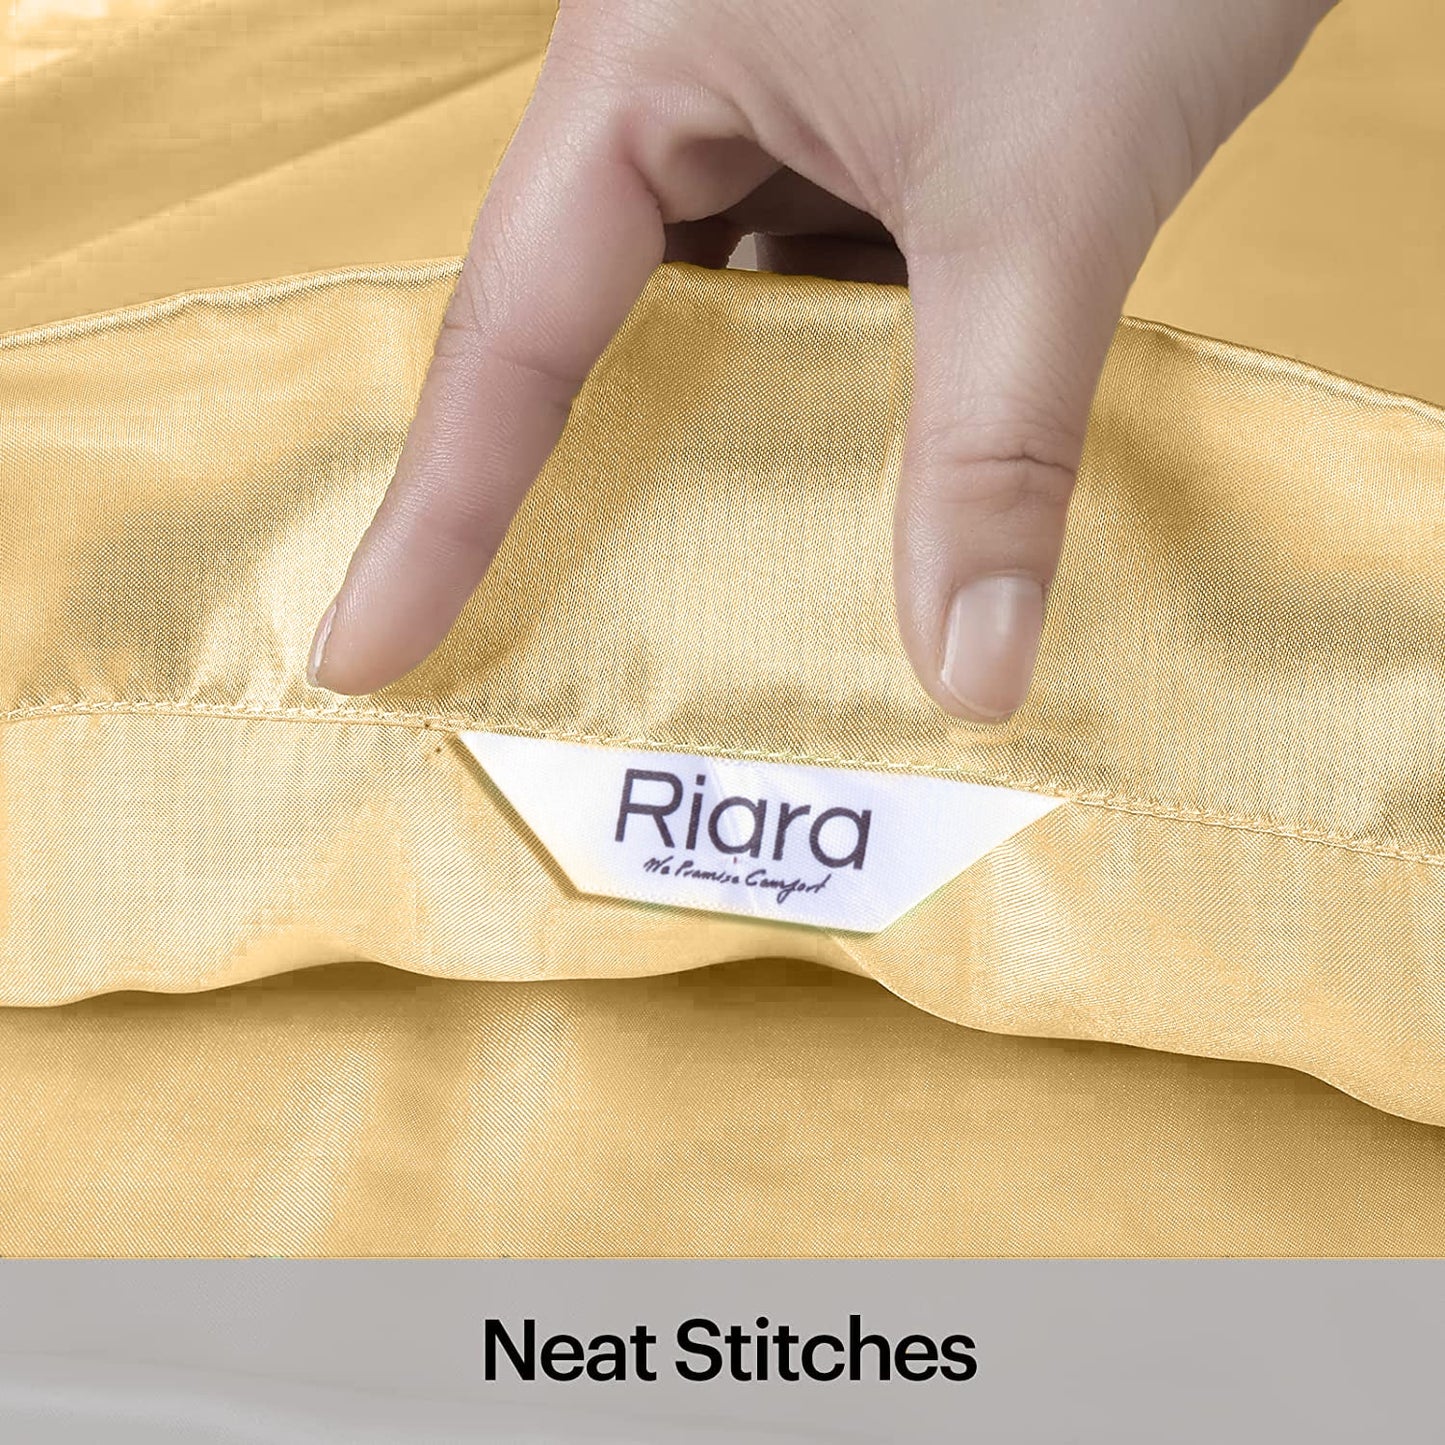 Luxury Soft Plain Satin Silk Pillowcases in Set of 2 - Golden